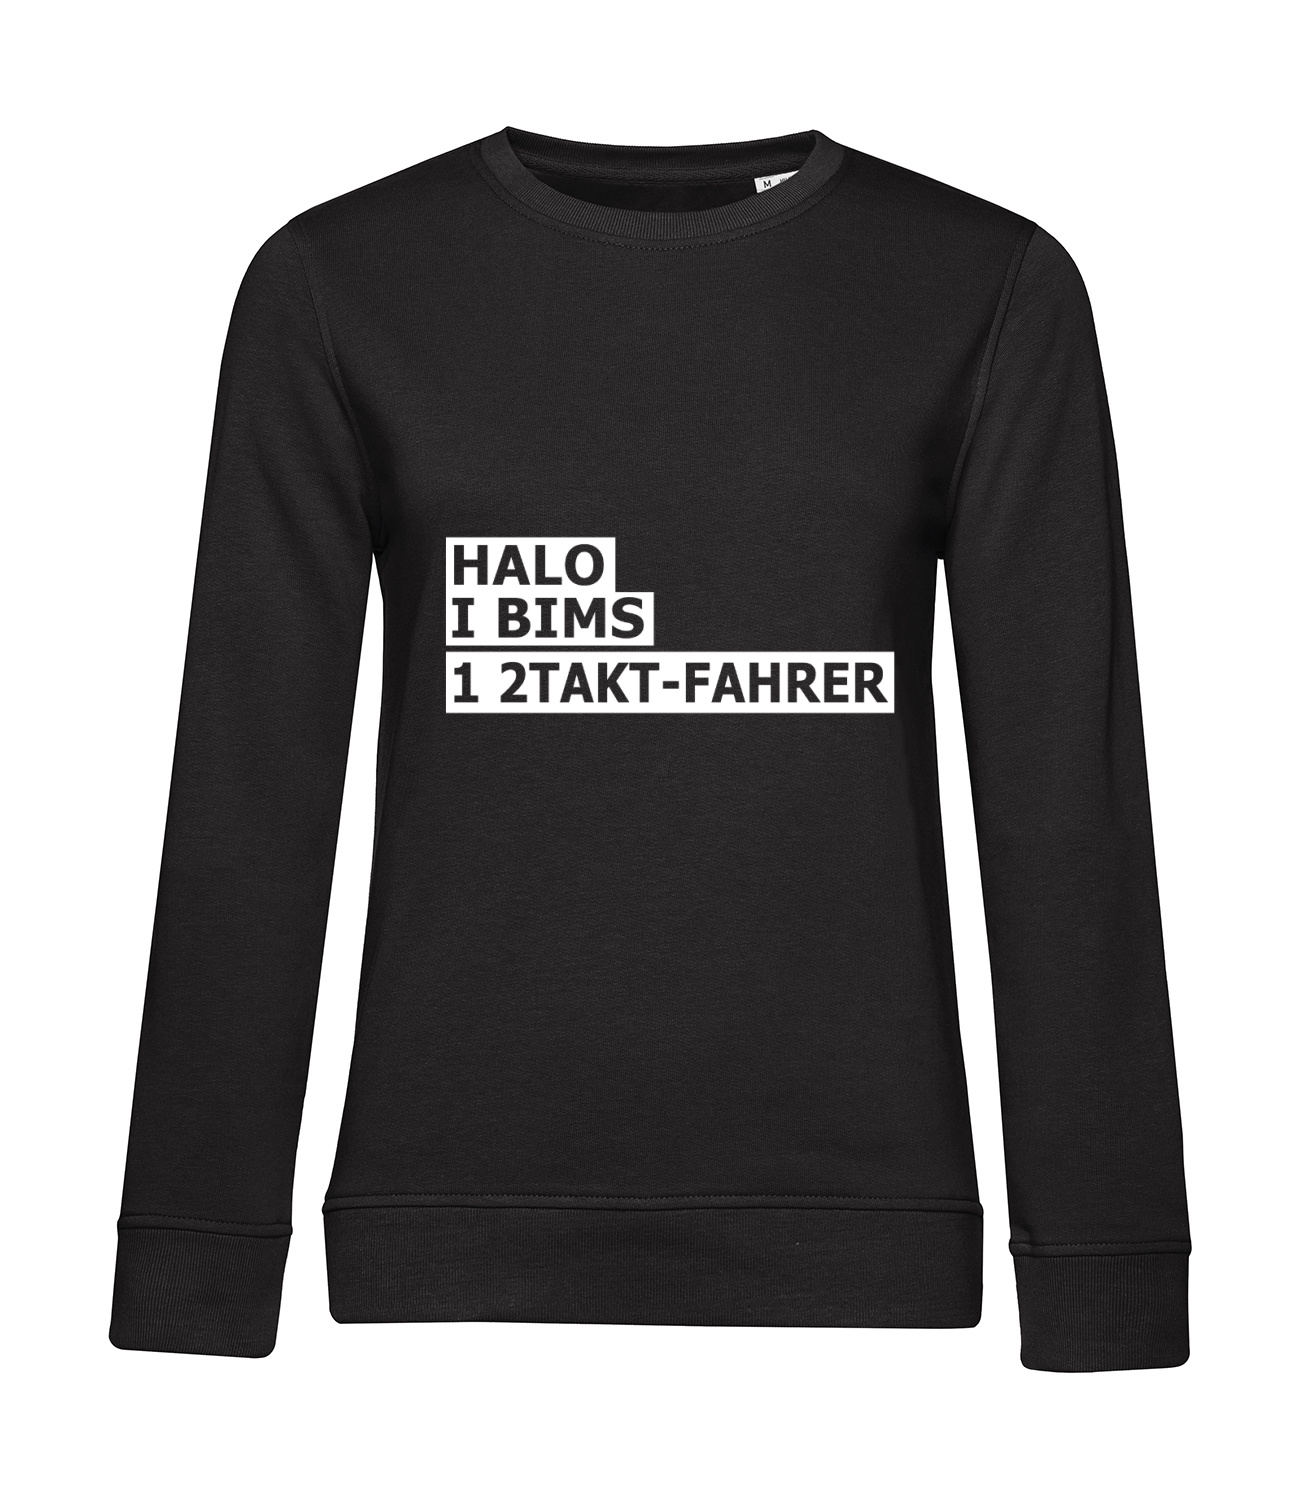 Nachhaltiges Sweatshirt Damen 2Takter - Halo I bims 1 2Takt-Fahrer